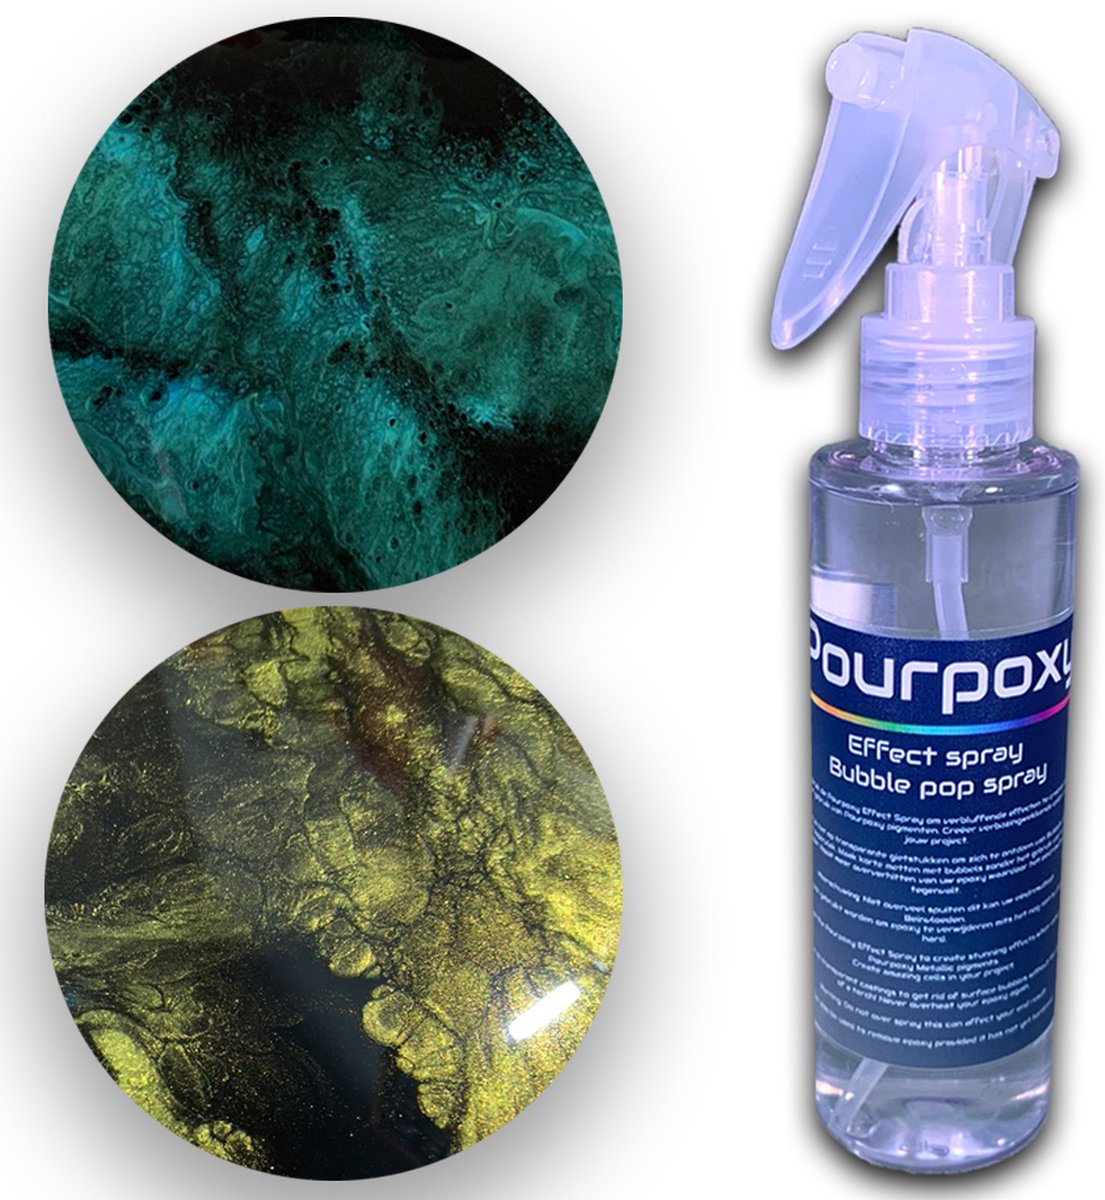 Bubble pop spray 150ml - Pourpoxy - effect spray - bubble burst - 